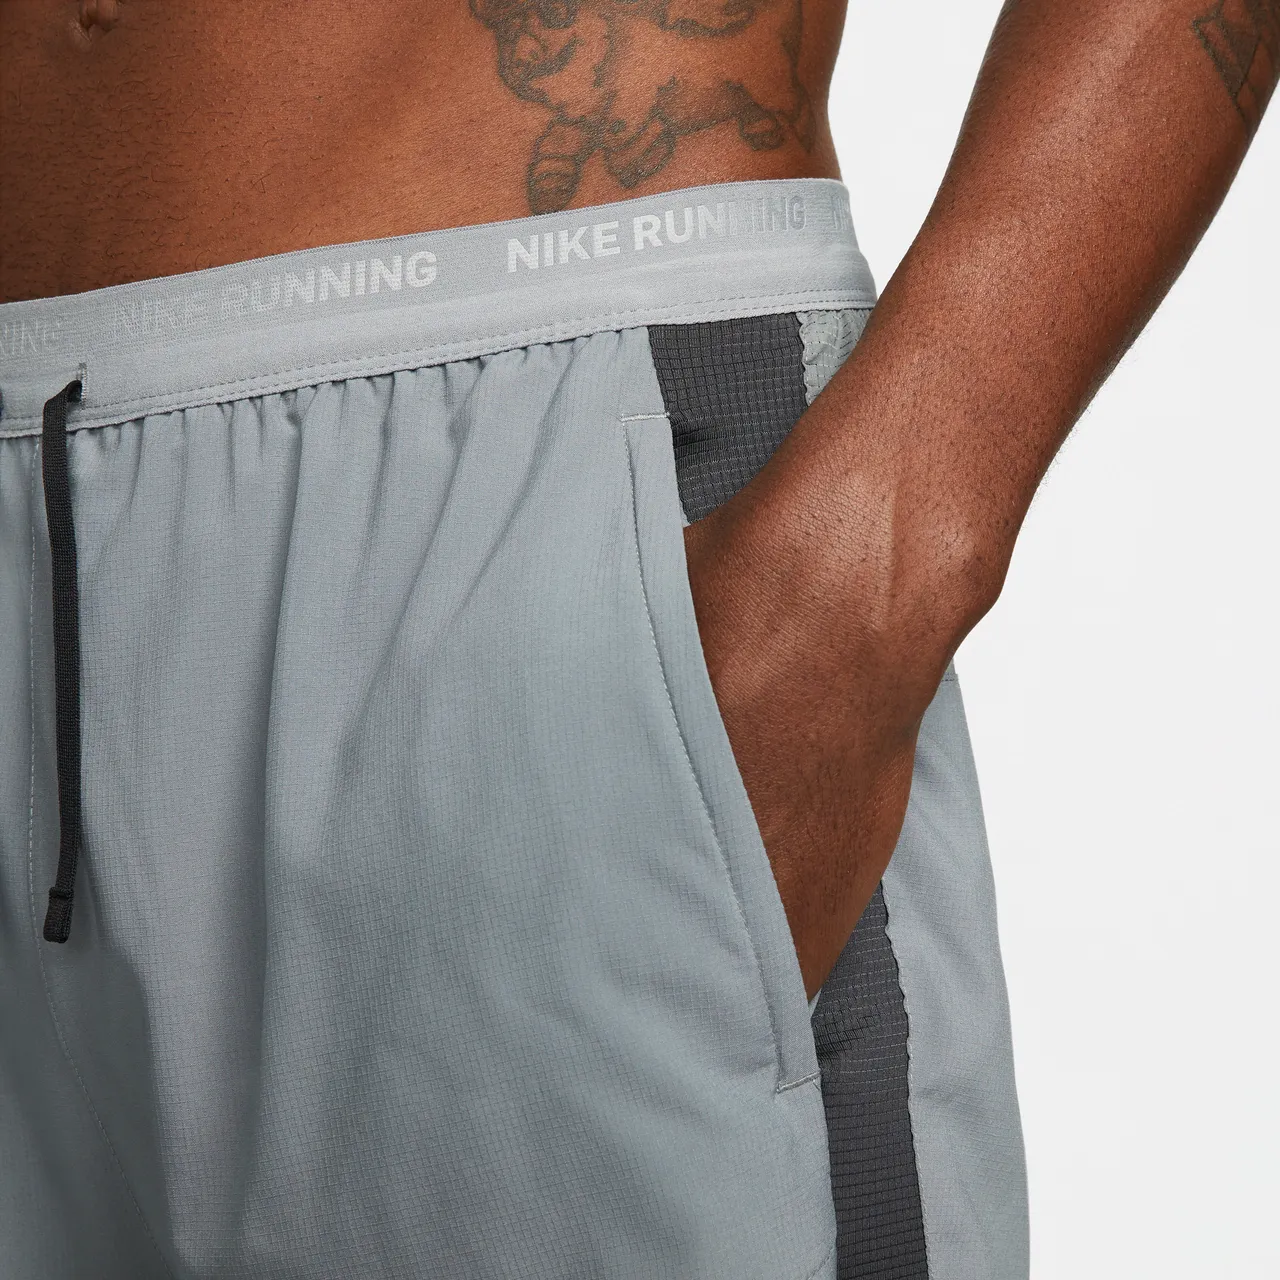 Nike Stride Men's Dri-FIT 13cm (approx.) Hybrid Running Shorts - Grey - Polyester